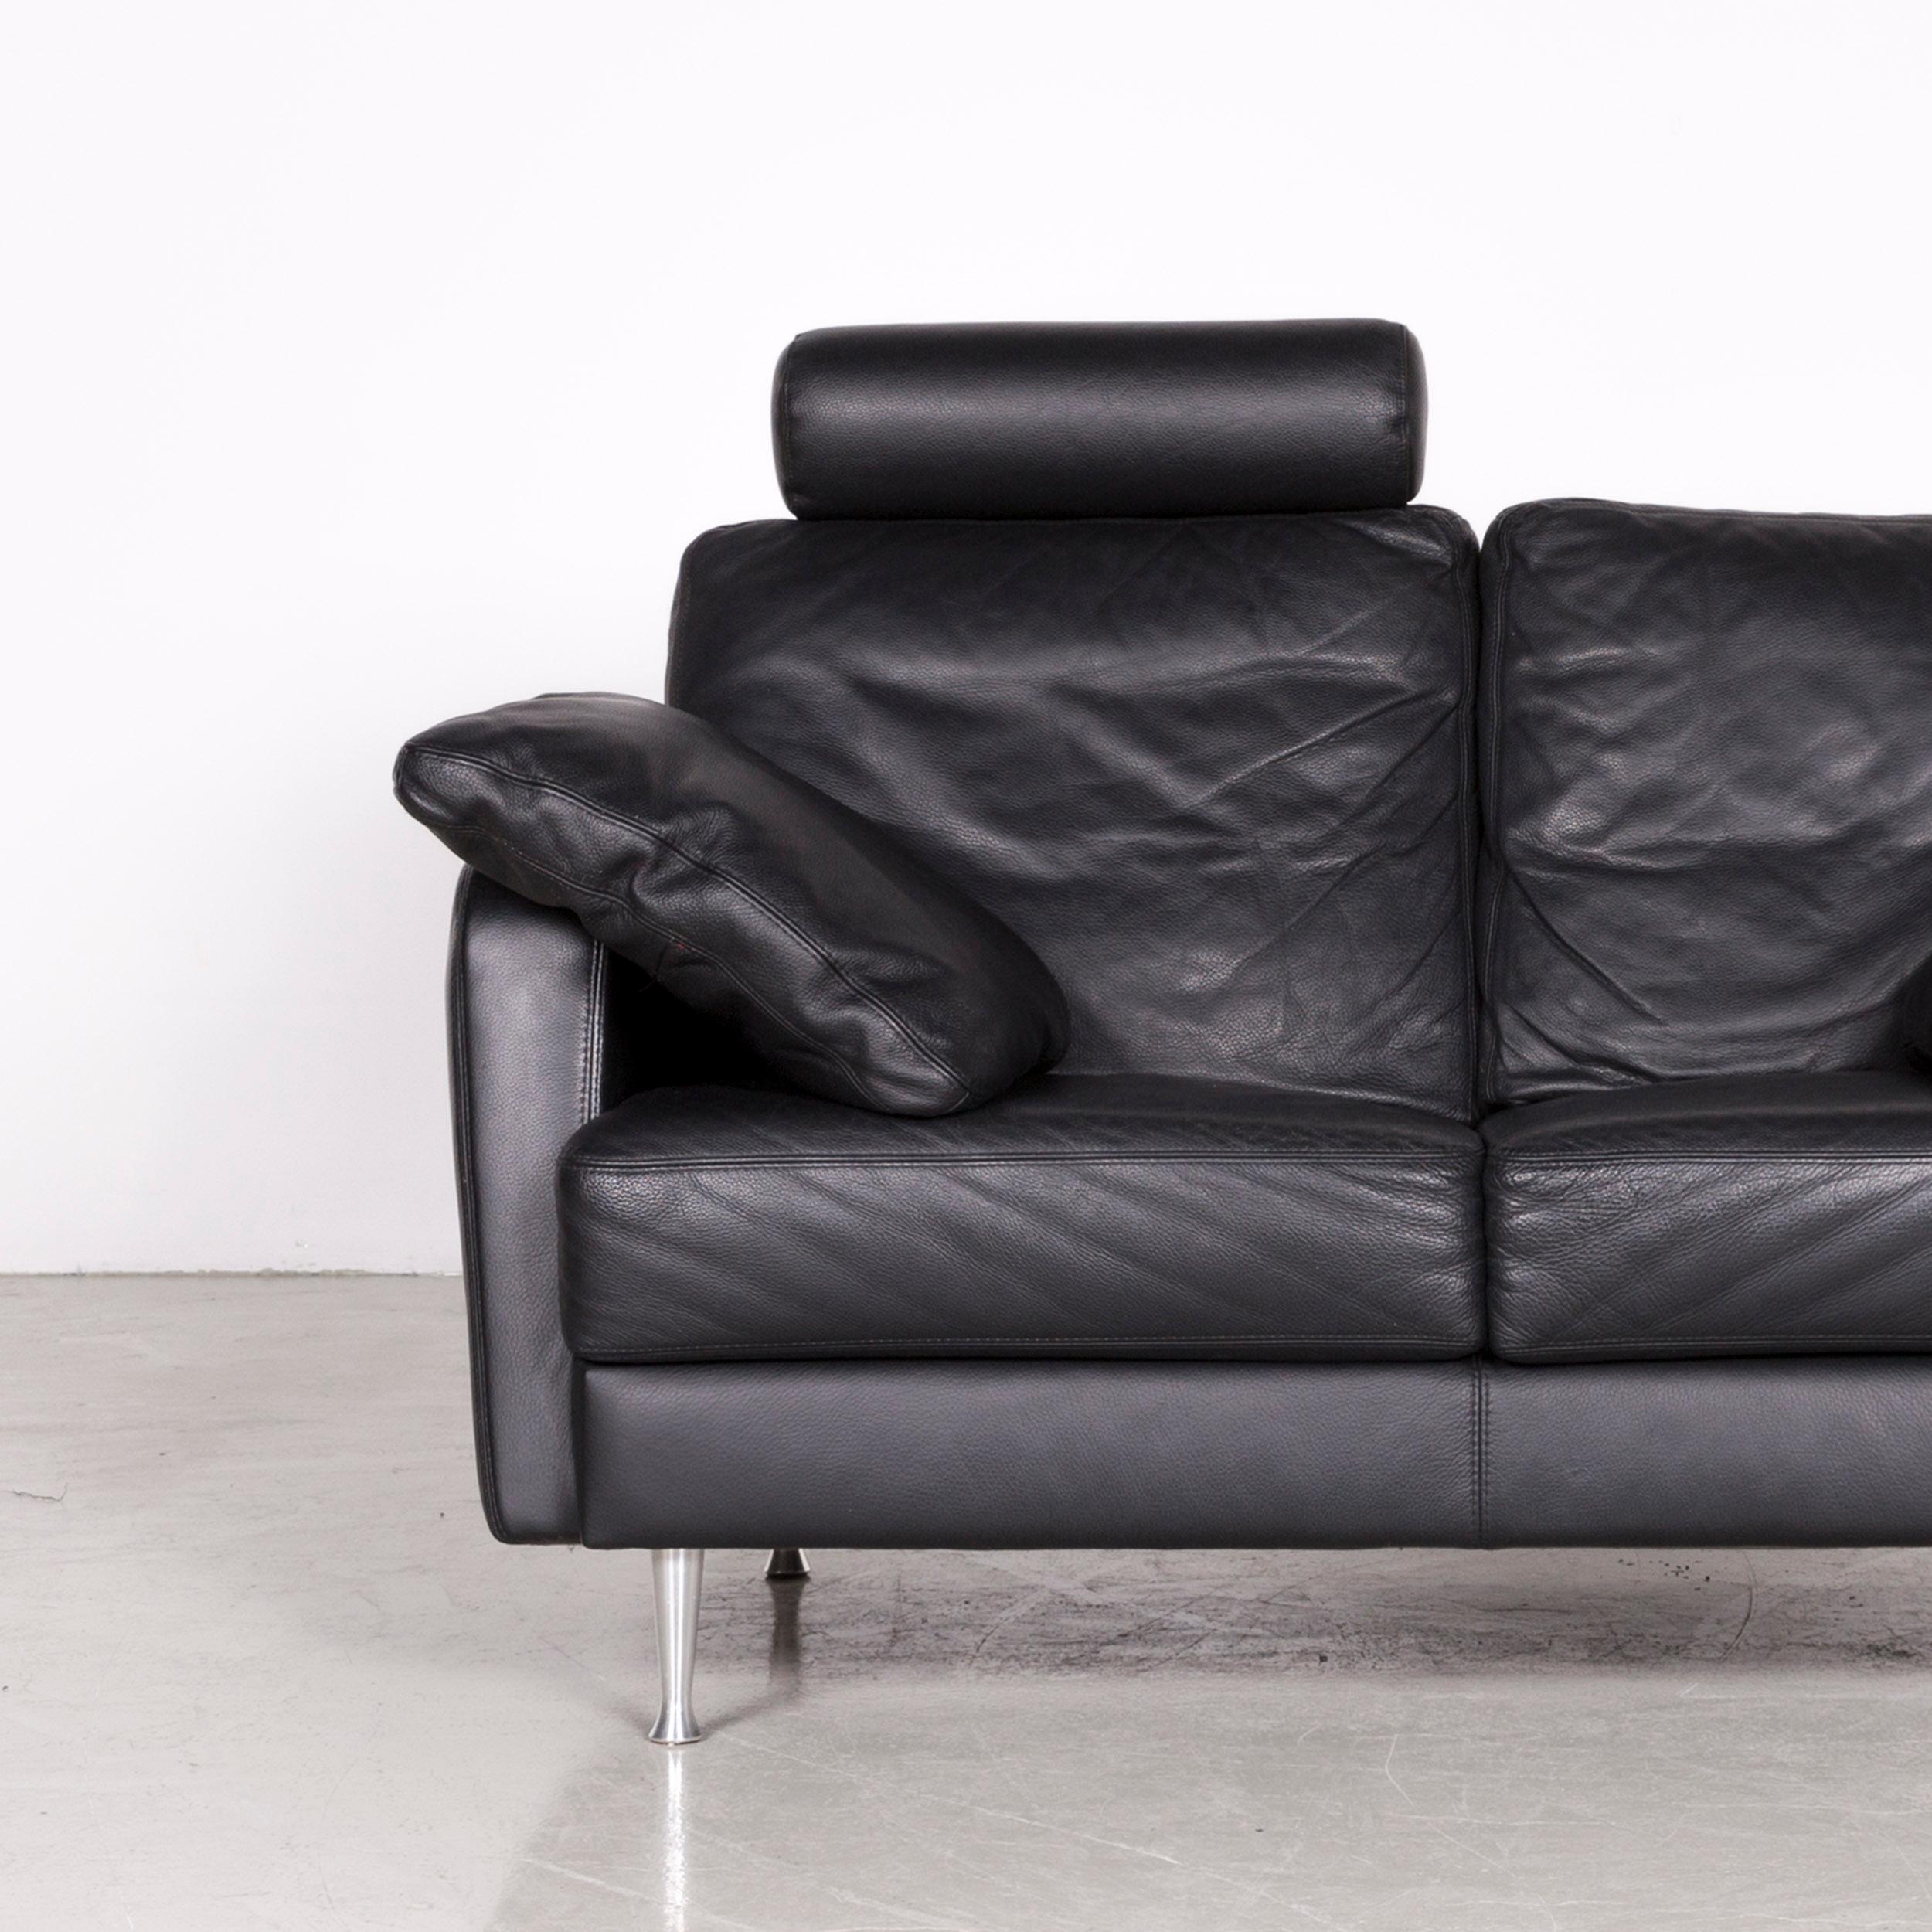 German Willi Schillig Designer Leather Sofa Black Two-Seat Couch